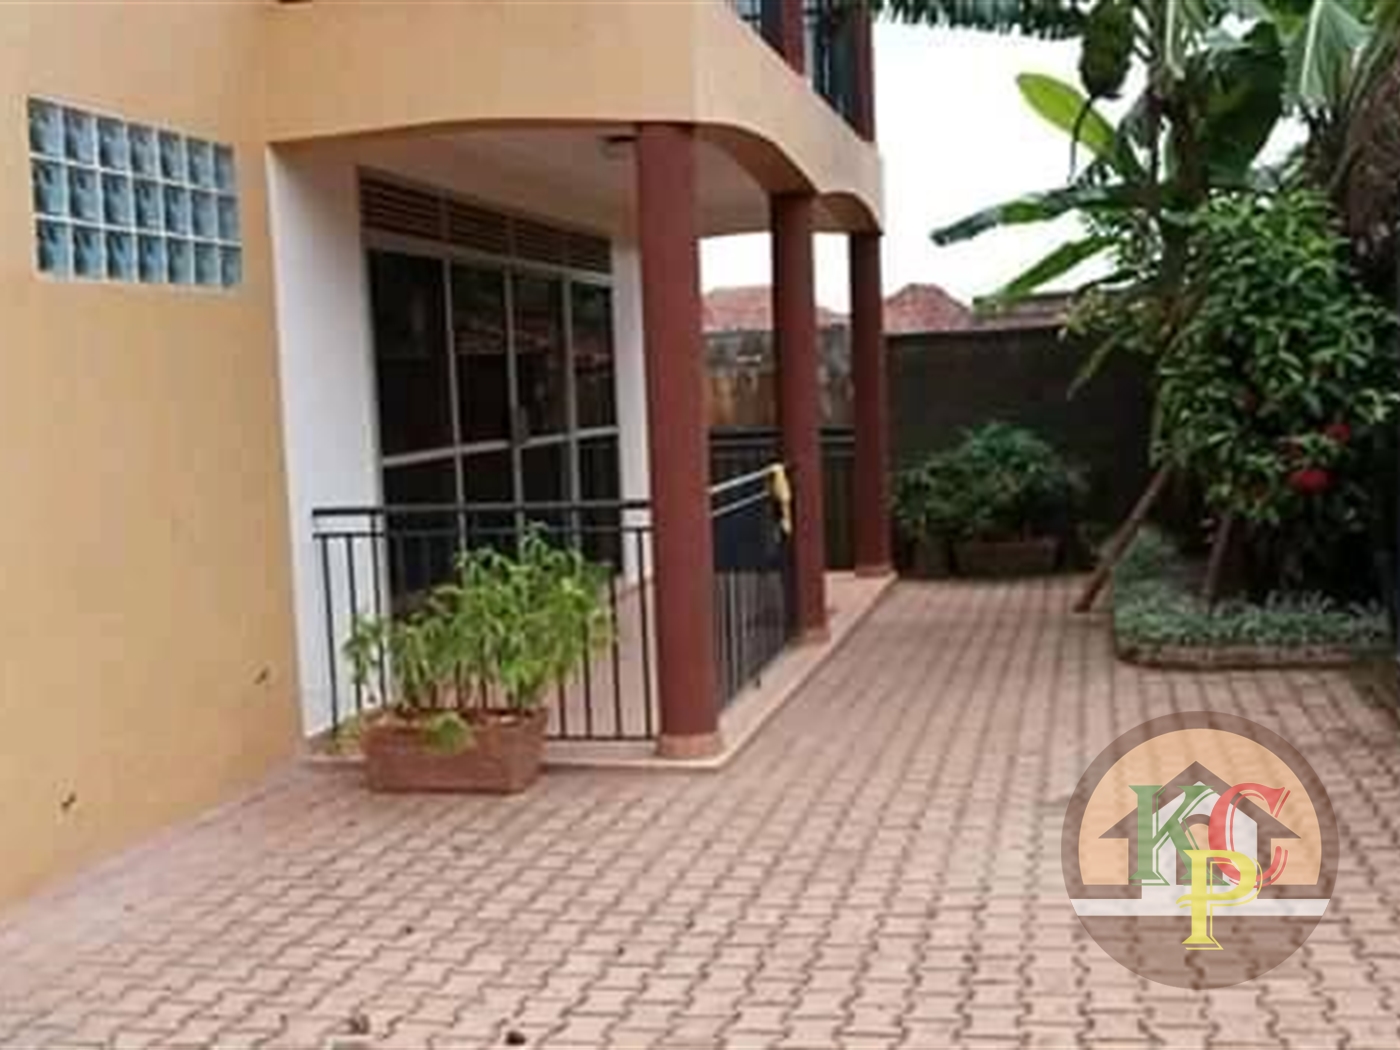 3 Bedroom House For Rent In Naguru Kampala Uganda Code 12 10 22